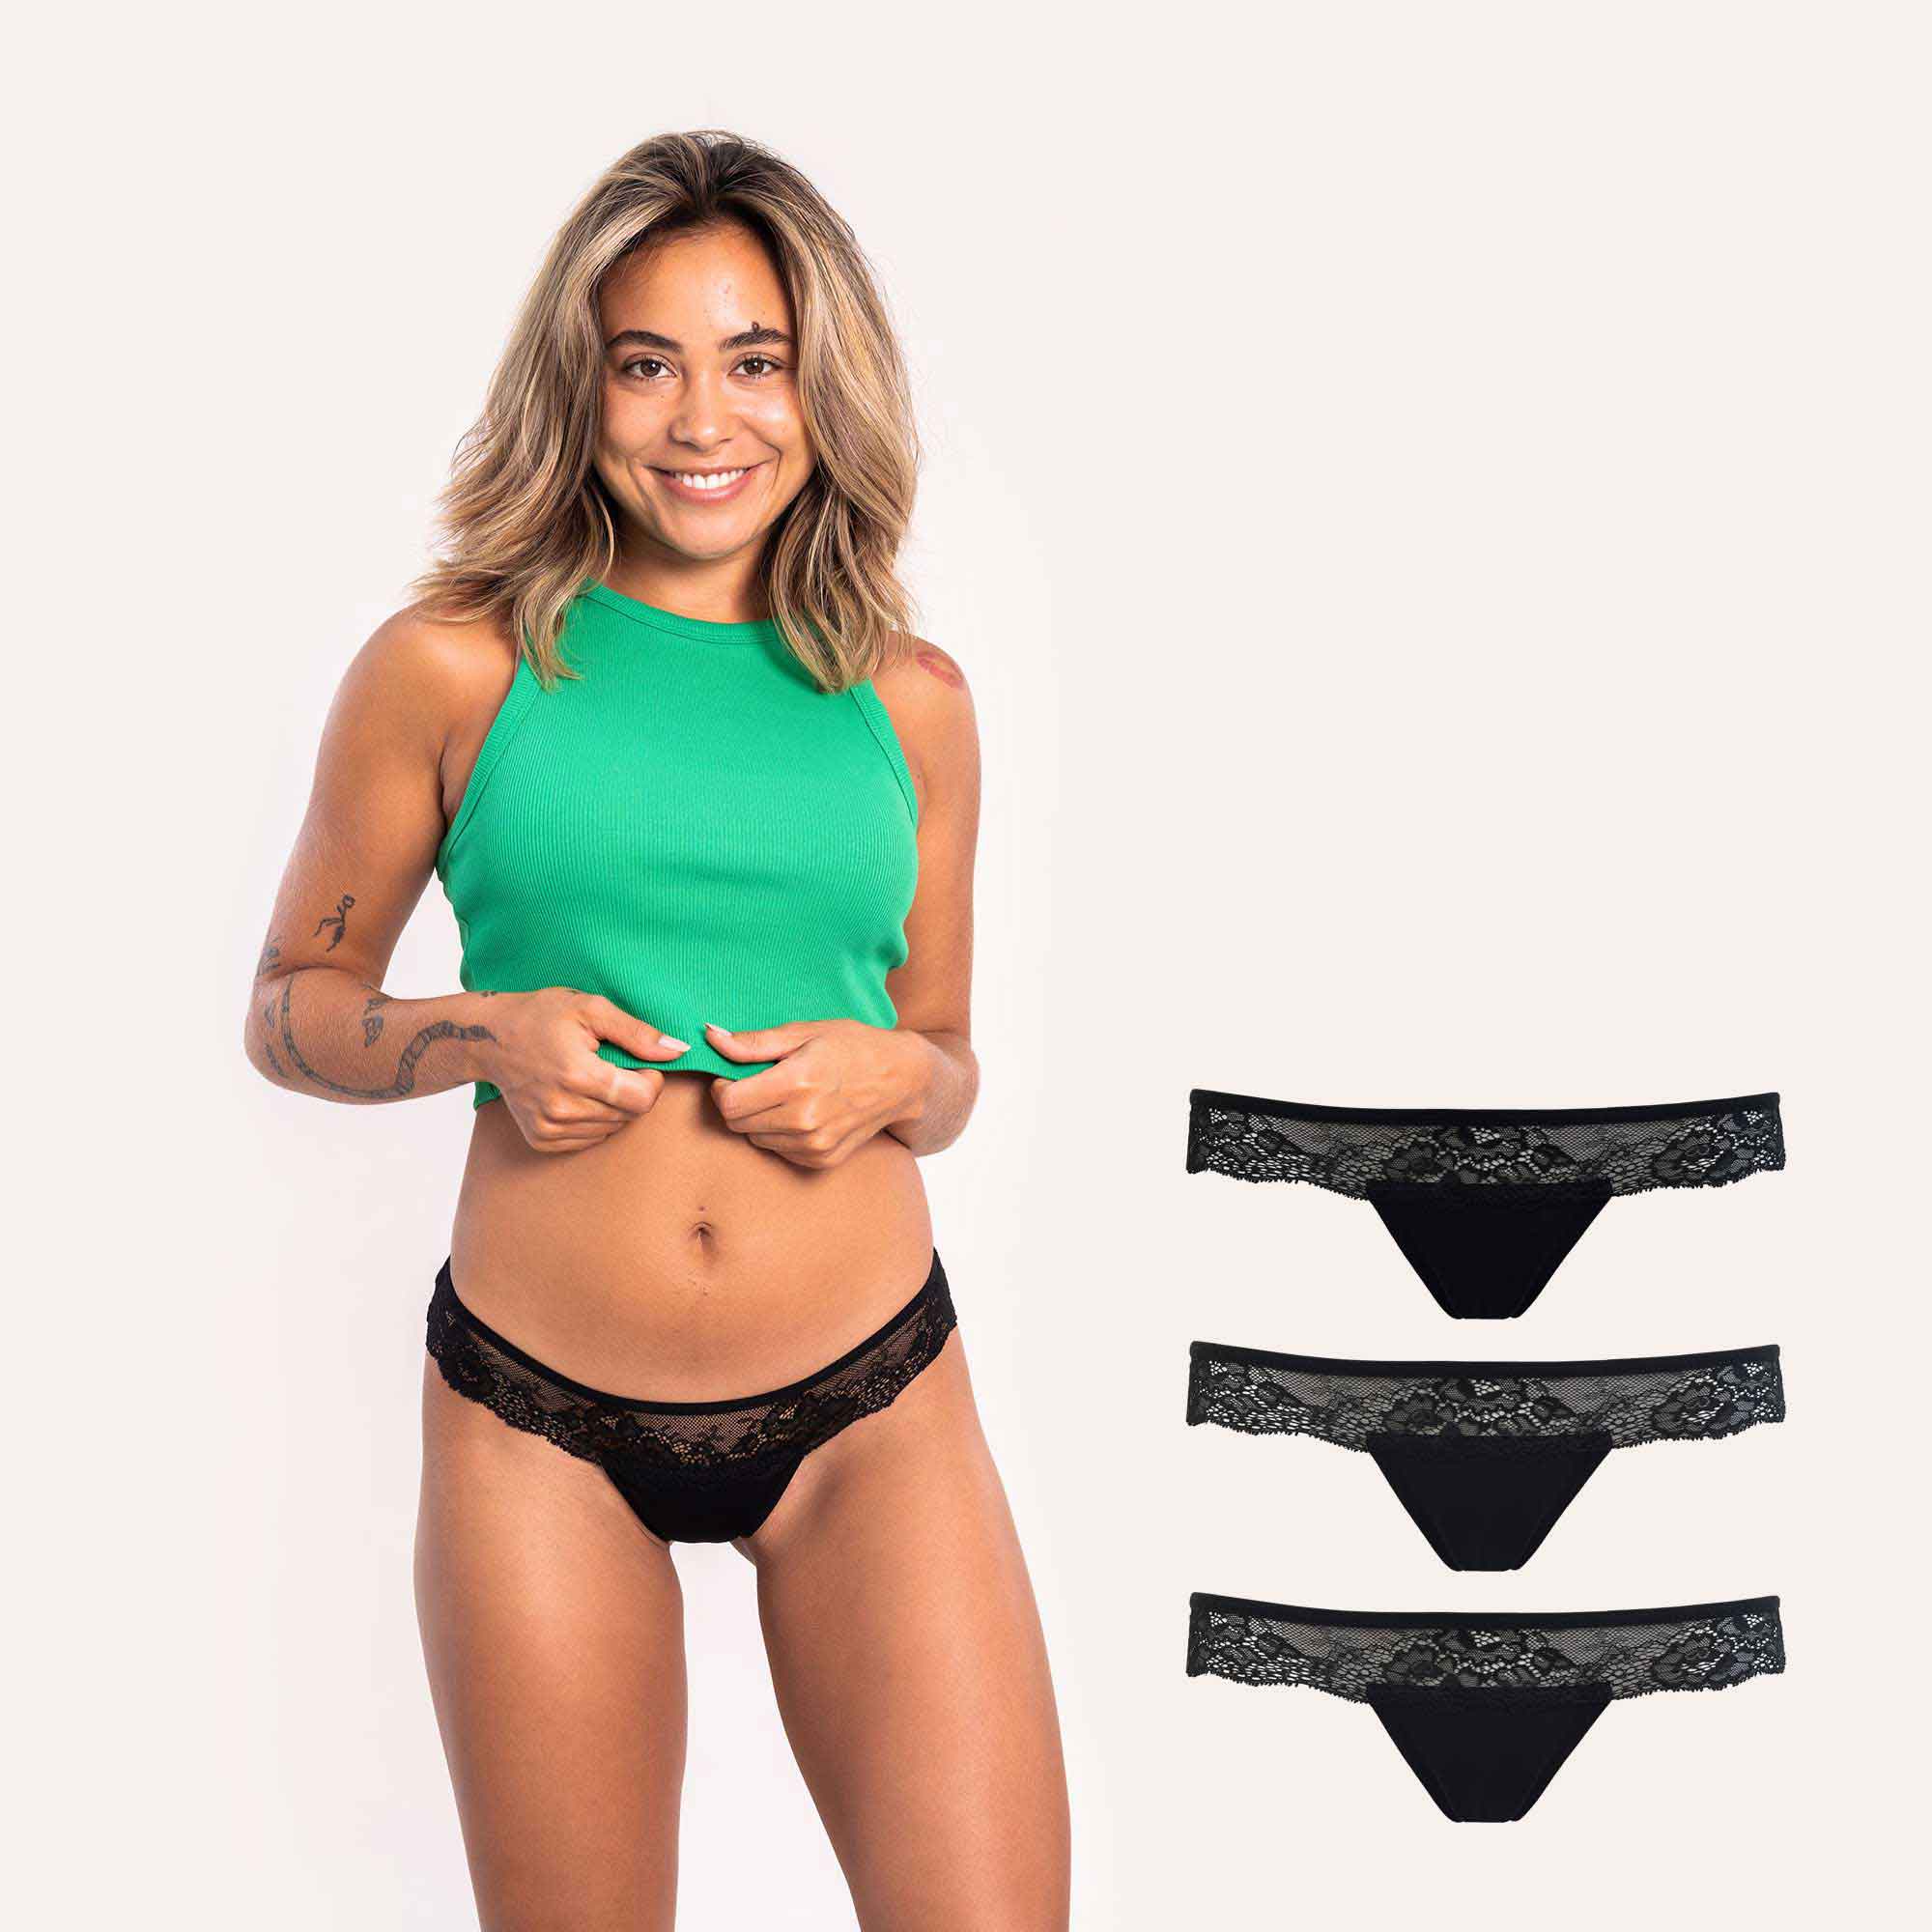 Daily Underwear Brasiliana (Set of 3)